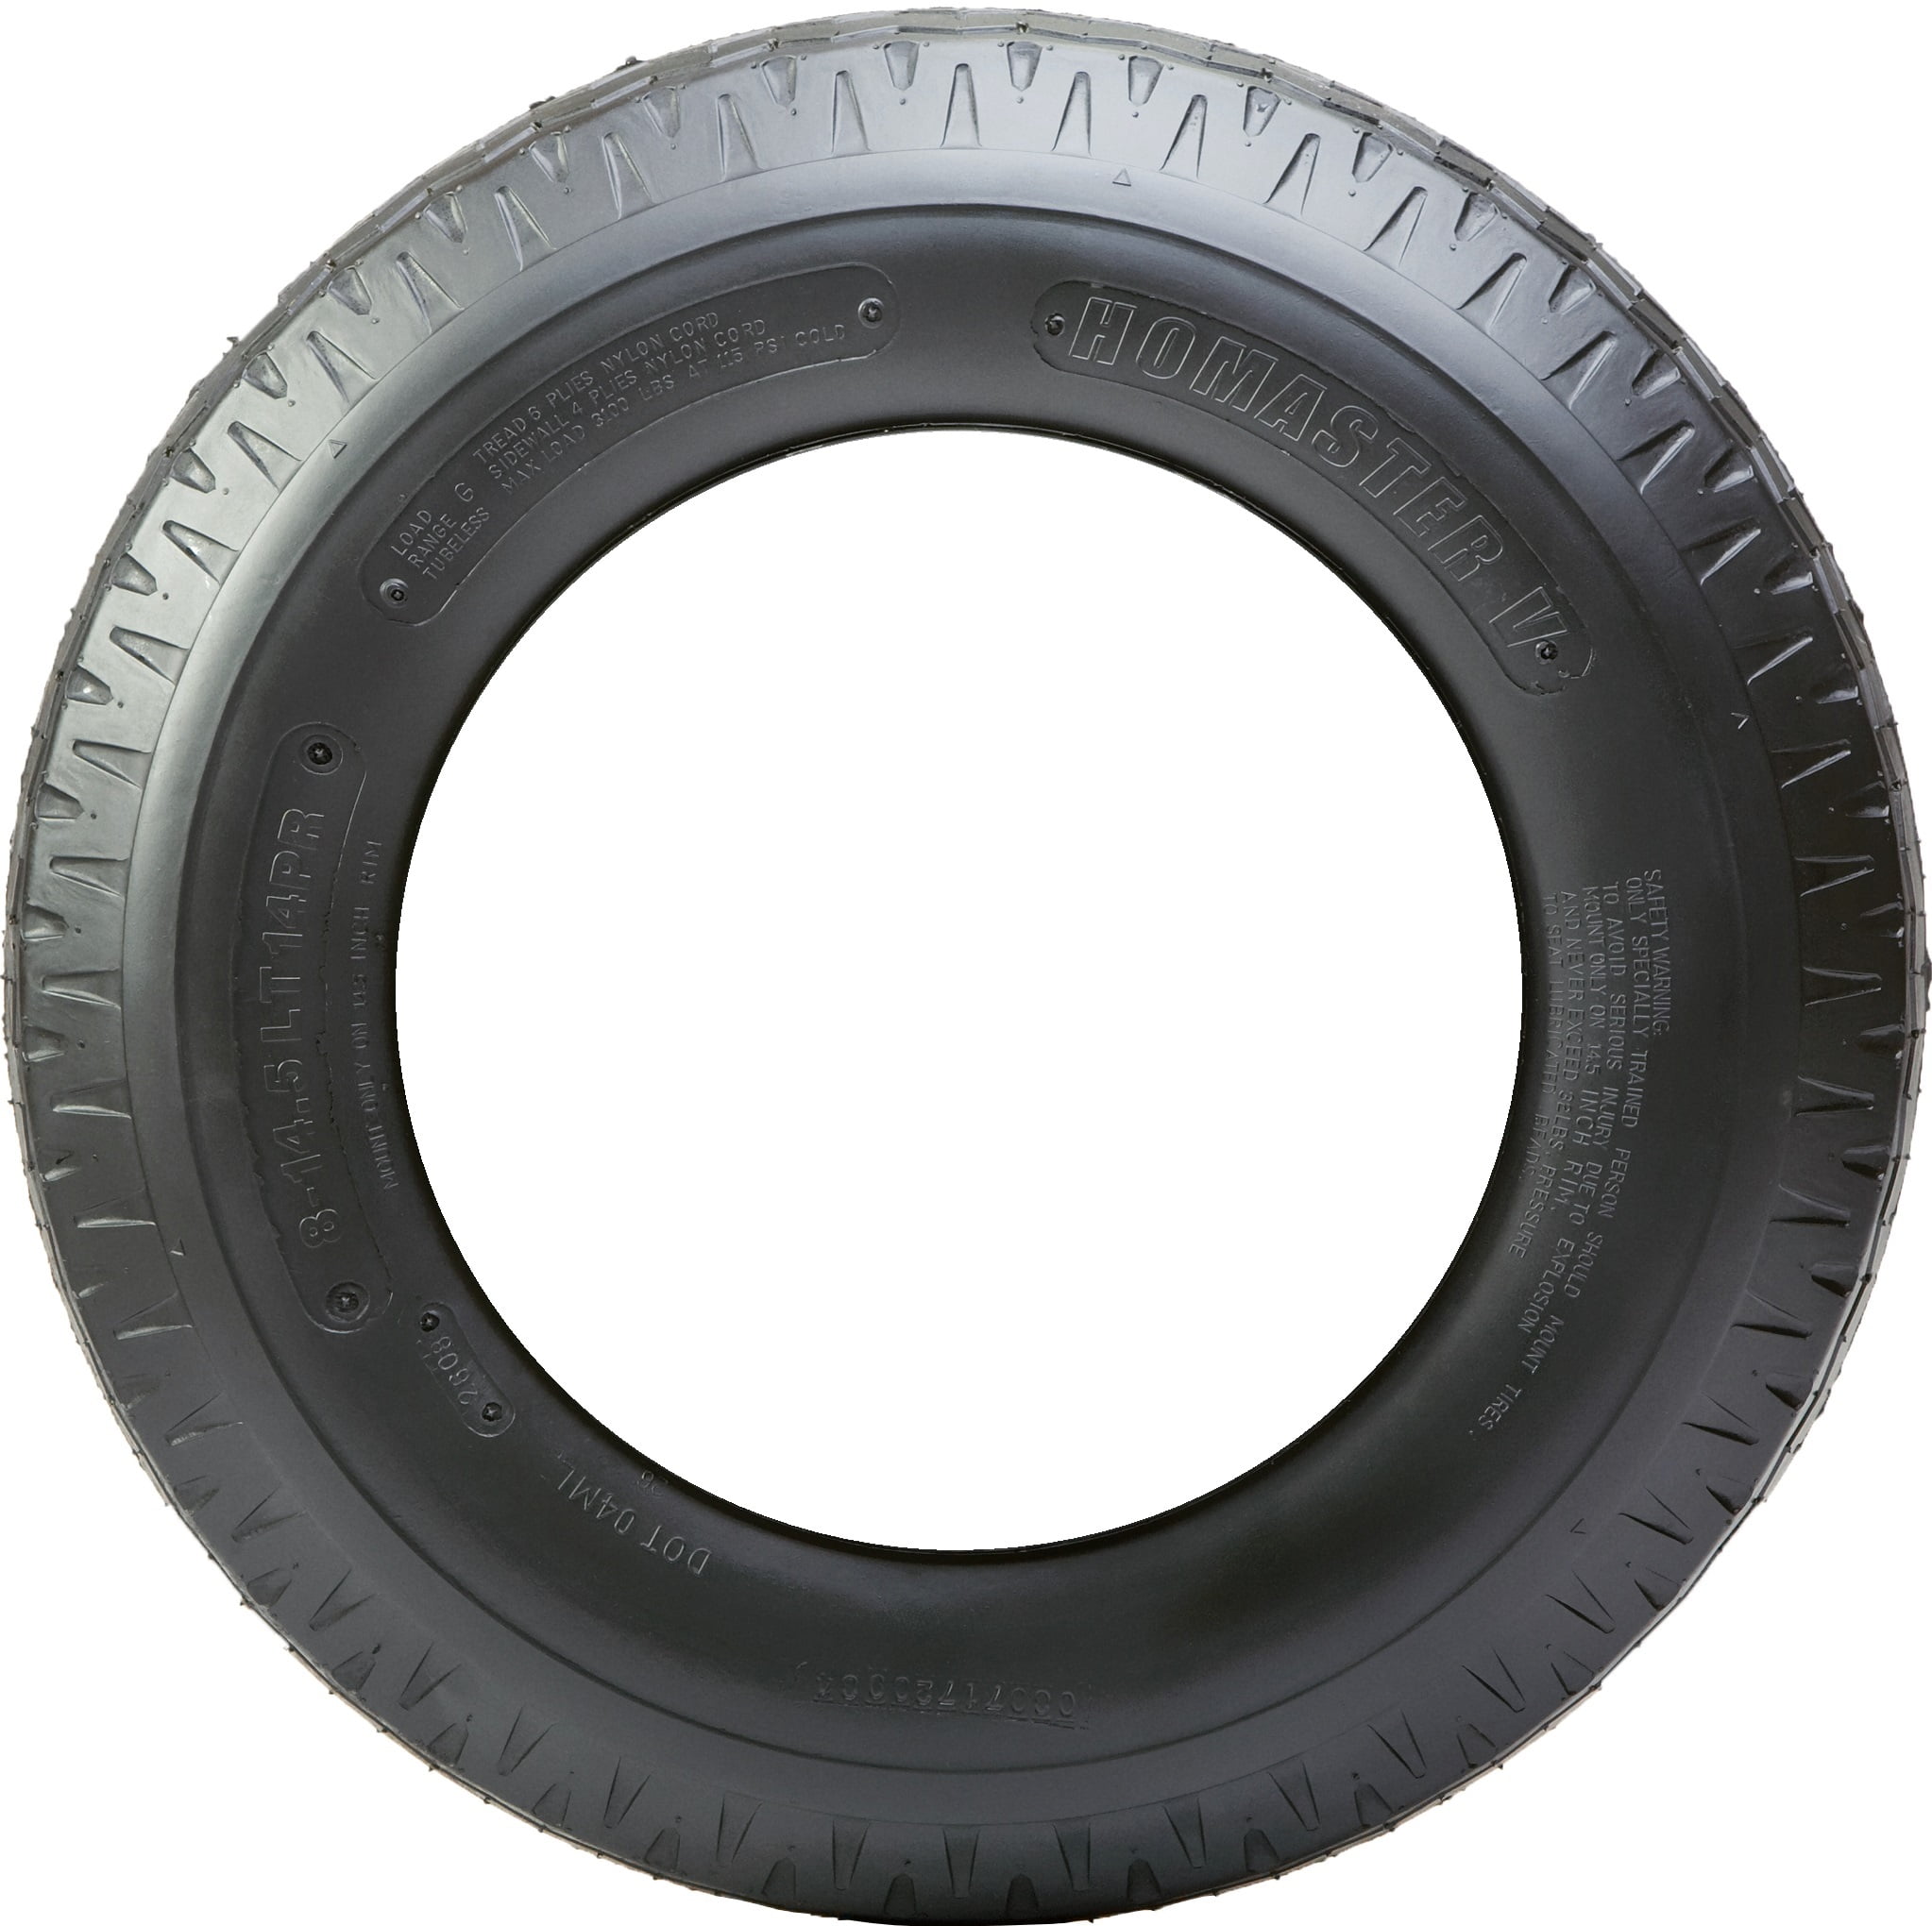 7 14 5 Tire Conversion Chart